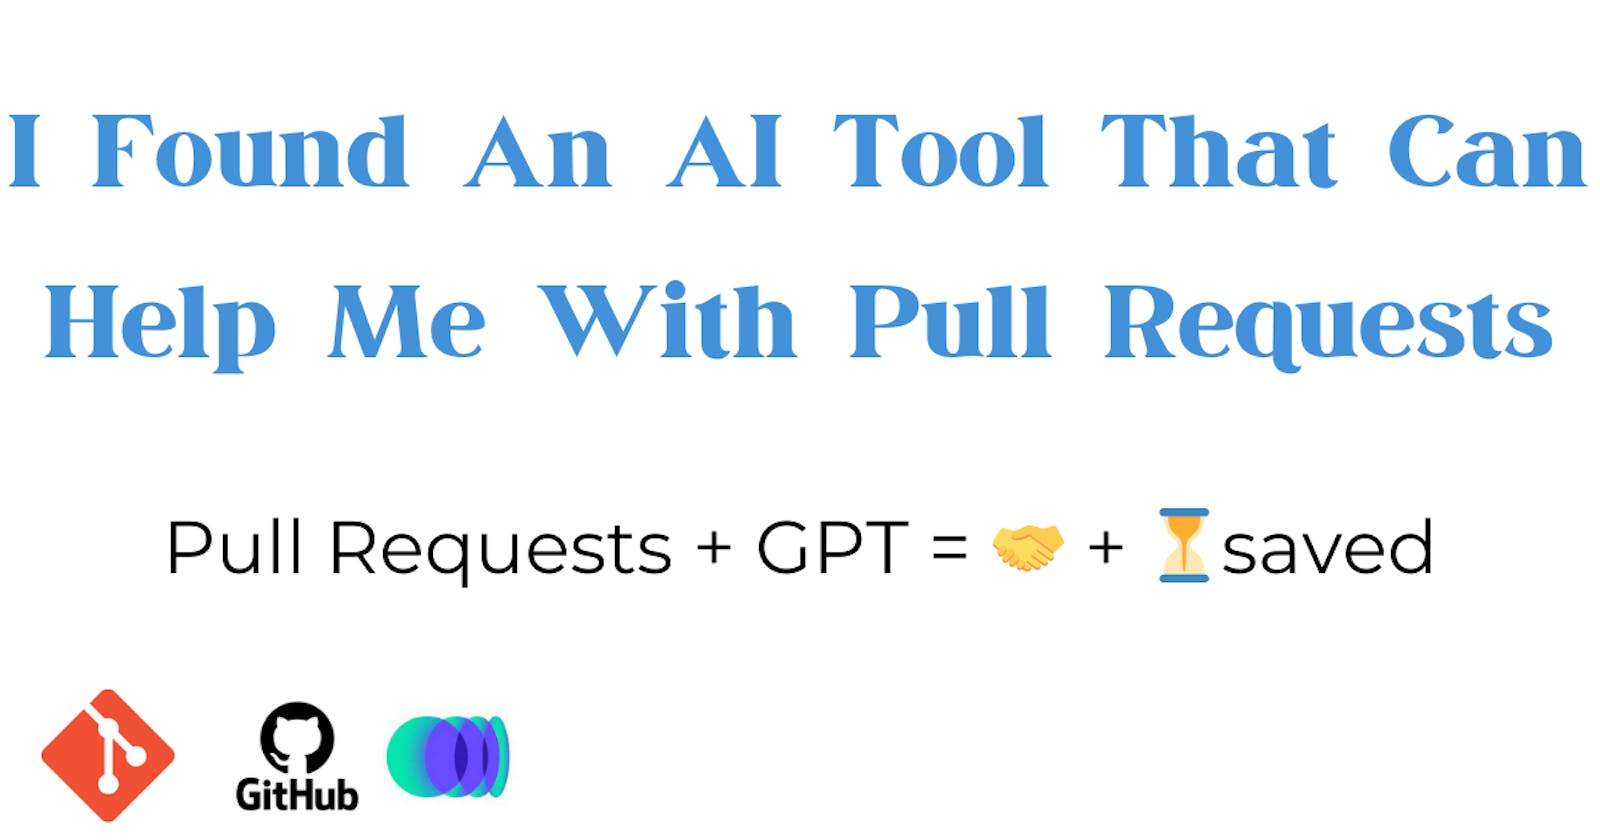 Automate Your Code Reviews With AI: CodiumAI vs Github Copilot